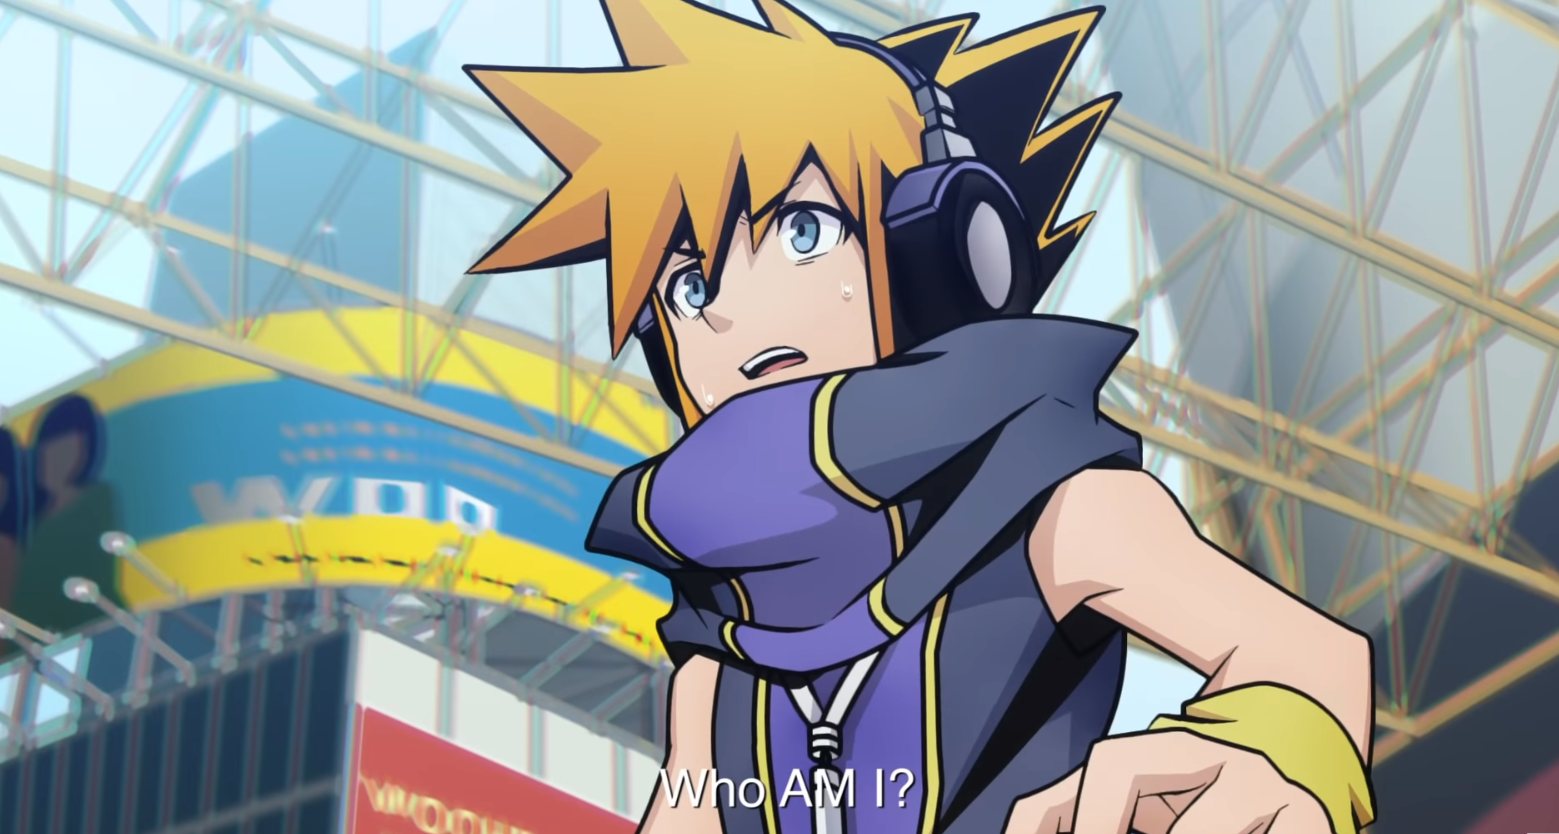 TWEWY Anime Kingdom Hearts Style by NutBugs2211 on DeviantArt